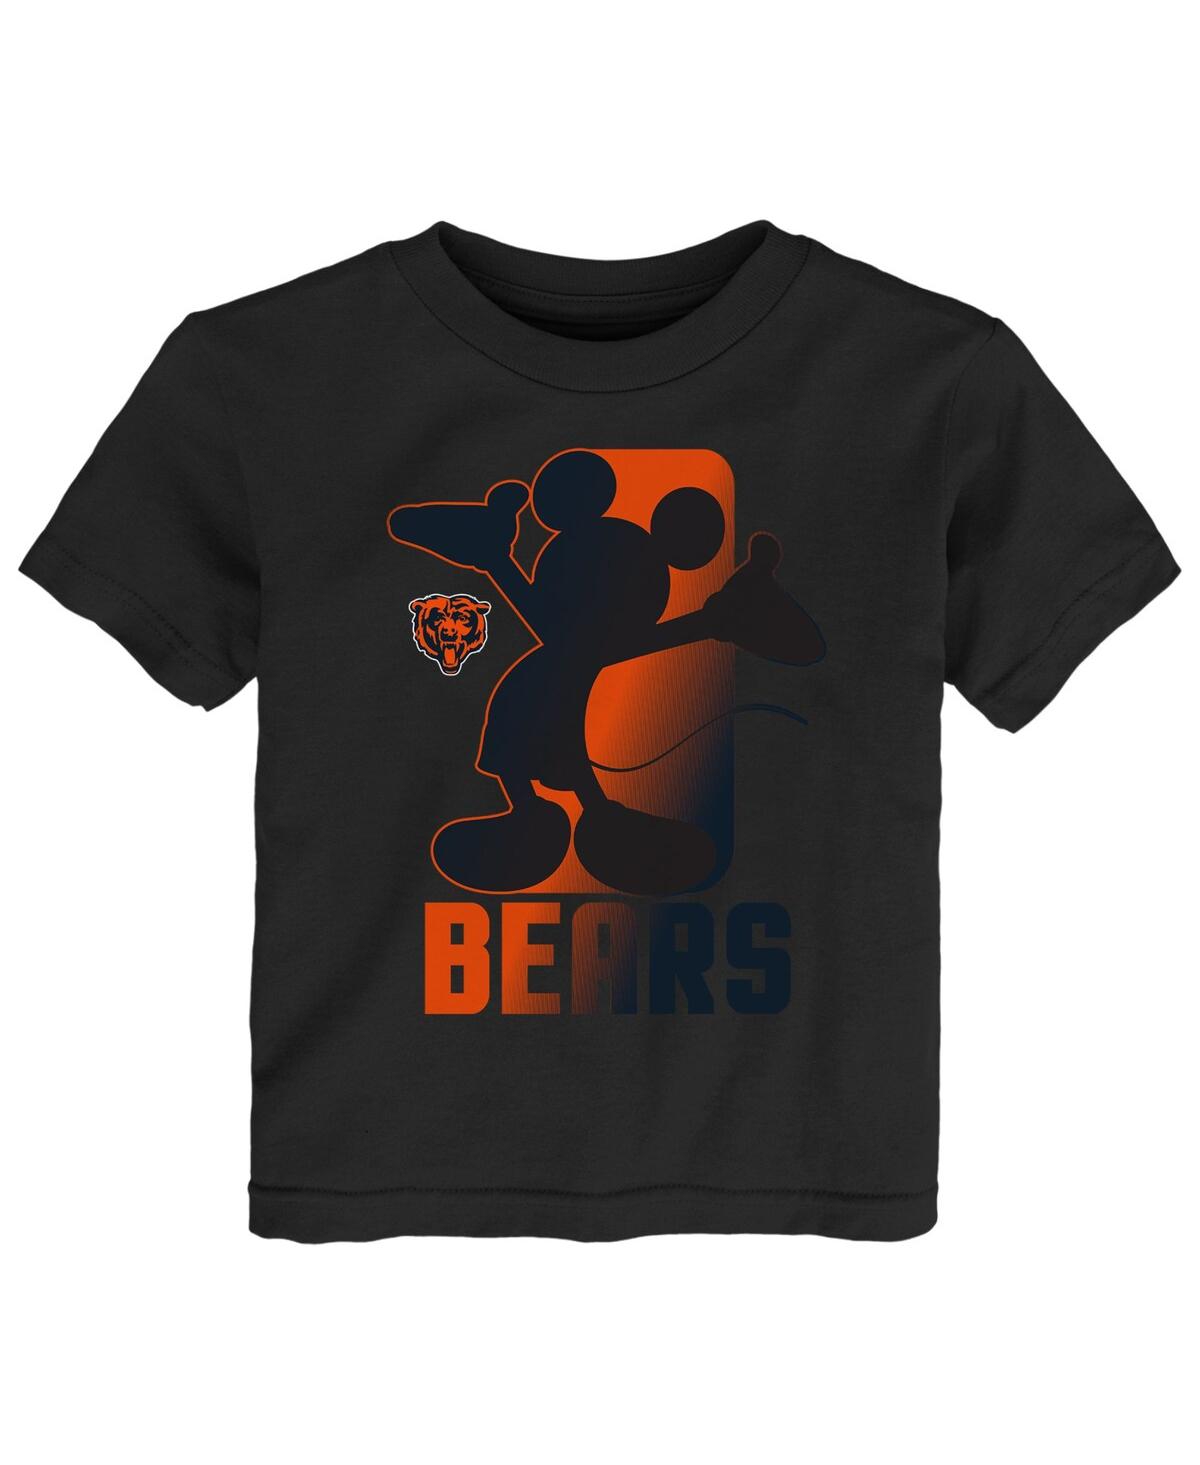 Outerstuff Babies' Toddler Boys And Girls Black Chicago Bears Disney Cross Fade T-shirt